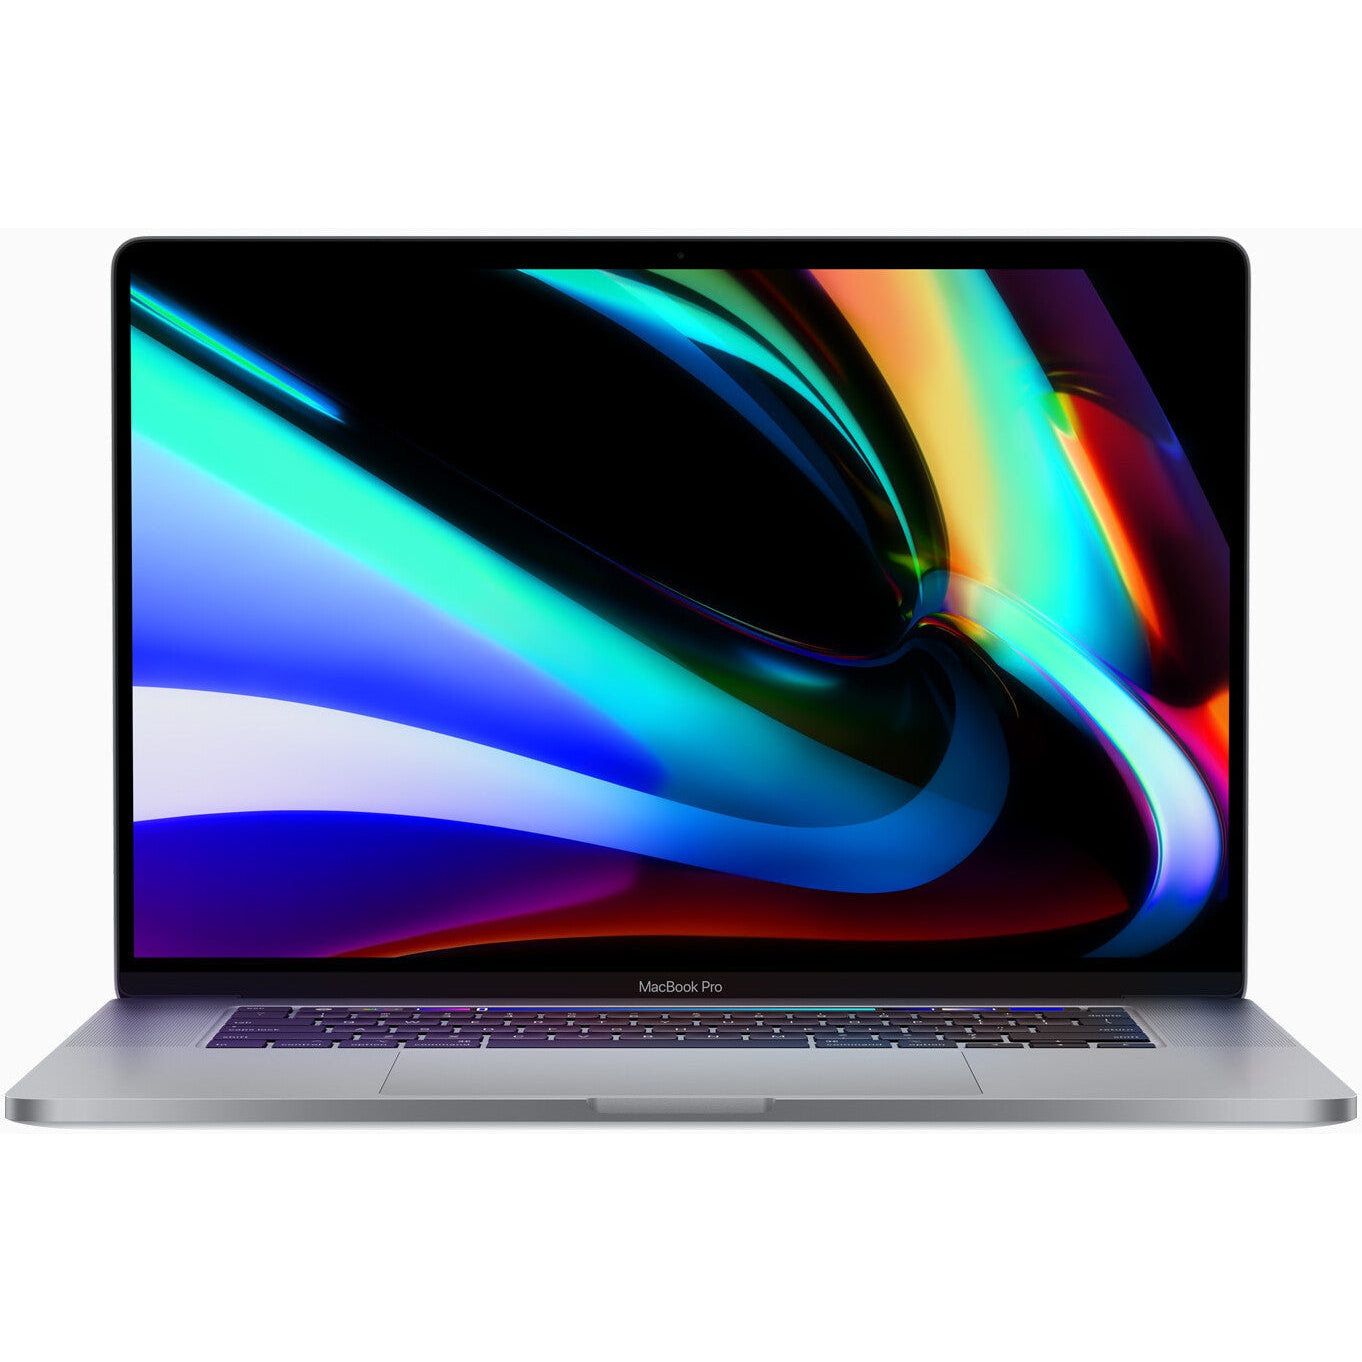 Apple MacBook Pro 16" MVVJ2B/A (2019) Intel Core i7-9750H 16GB 512GB Space Grey - Refurbished Pristine